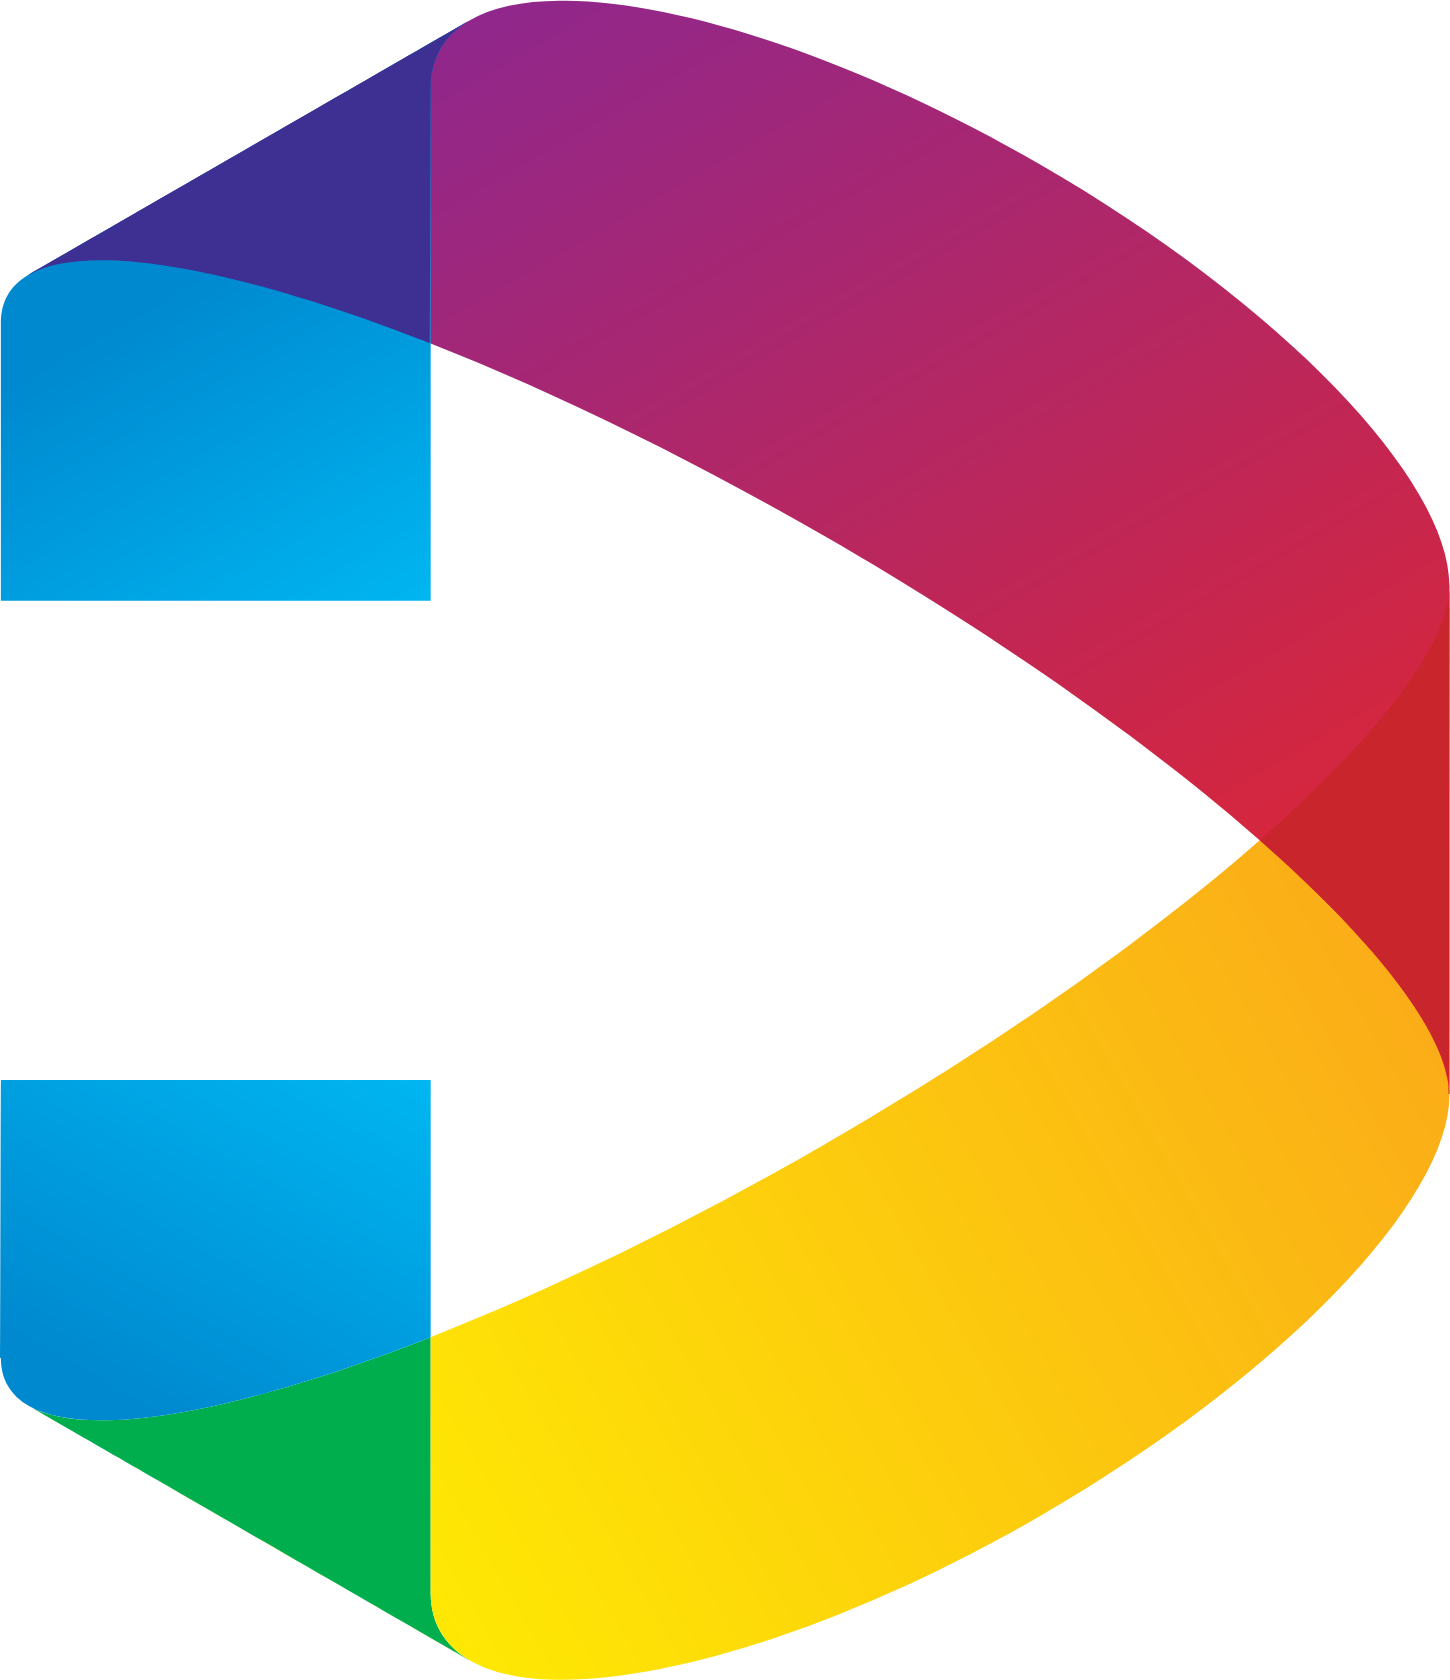 Direct Line Group logo (transparent PNG)